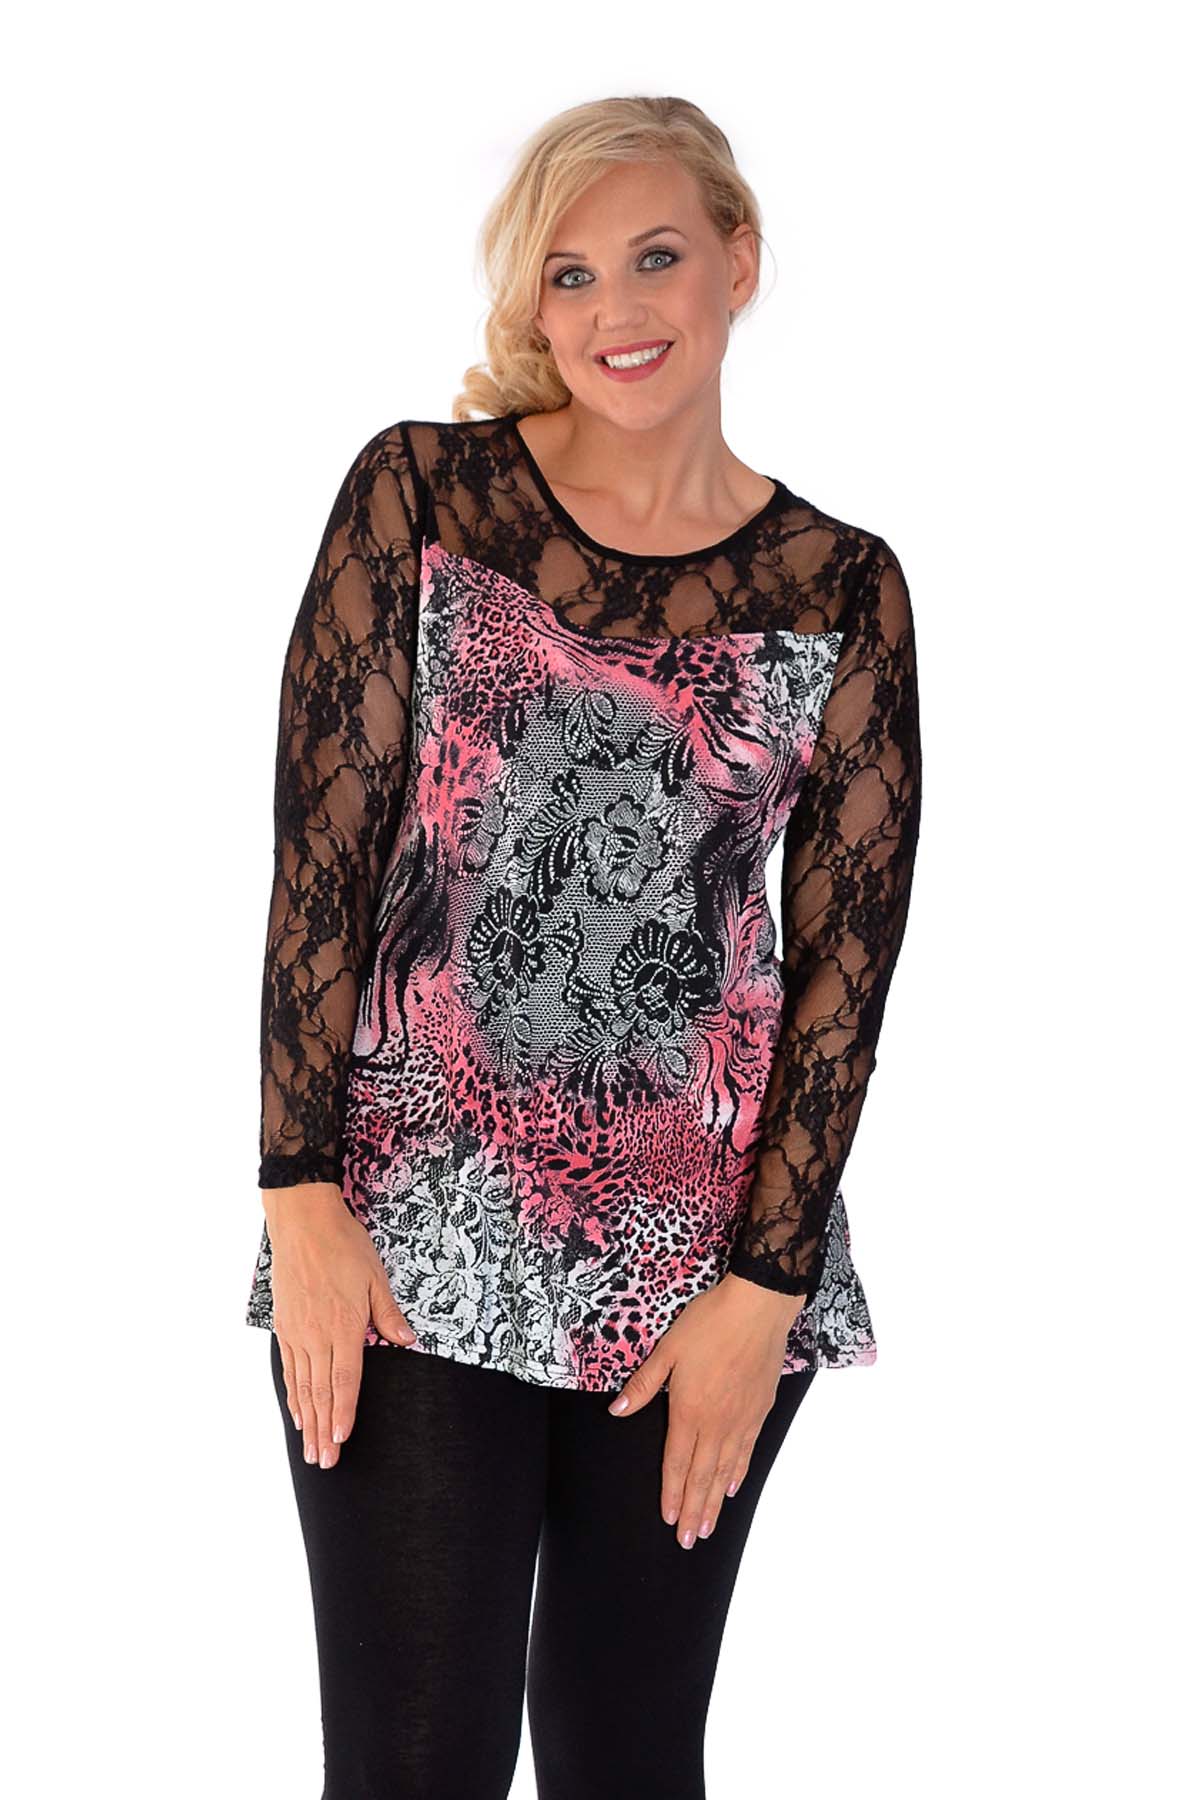 New Ladies Plus Size Top Womens Animal Print Tunic Black Lace Sale Nouvelle | eBay